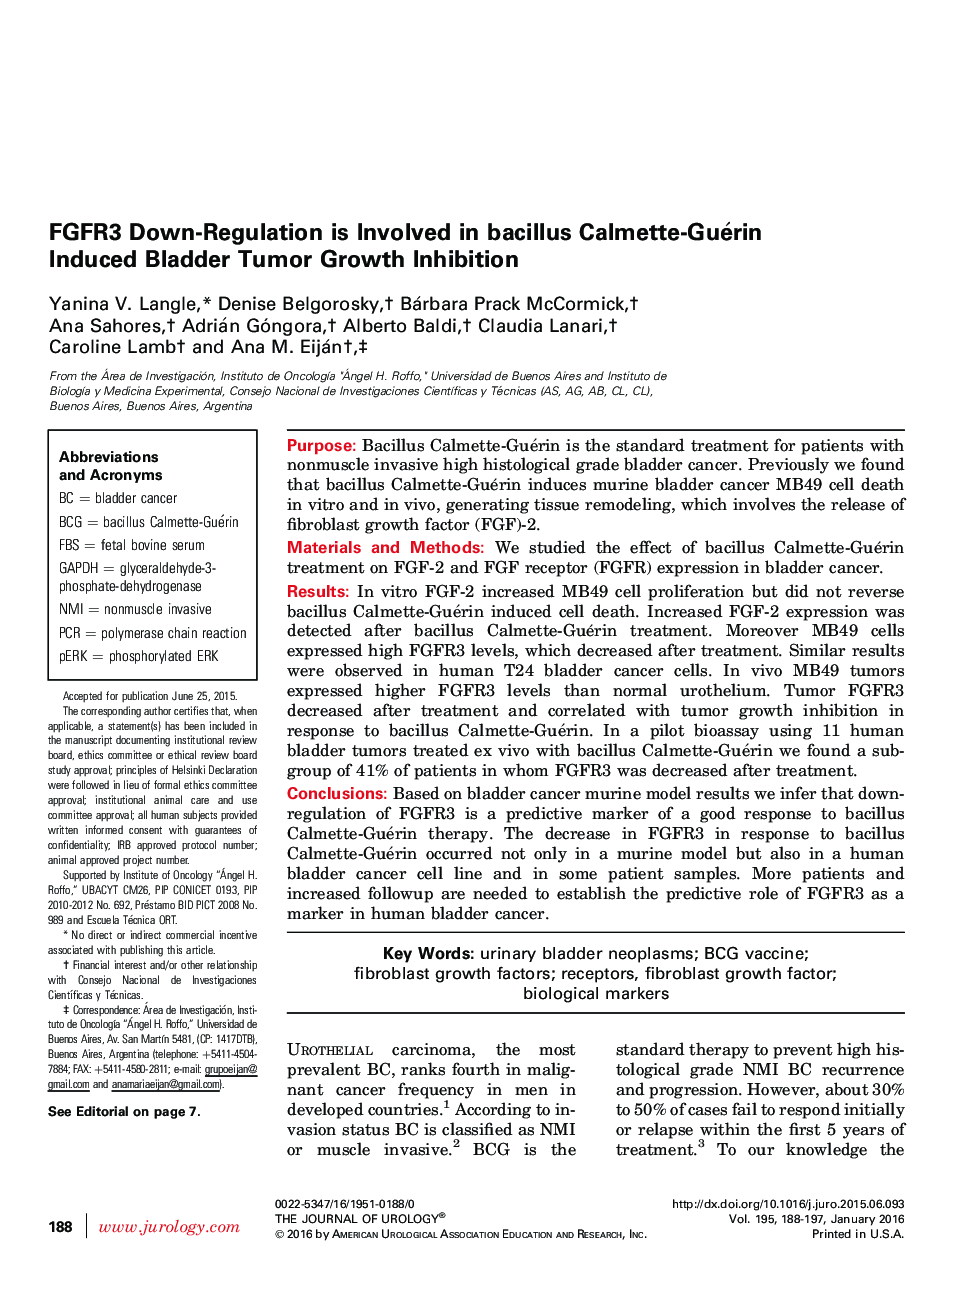 FGFR3 Down-Regulation is Involved in bacillus Calmette-Guérin Induced Bladder Tumor Growth Inhibition 